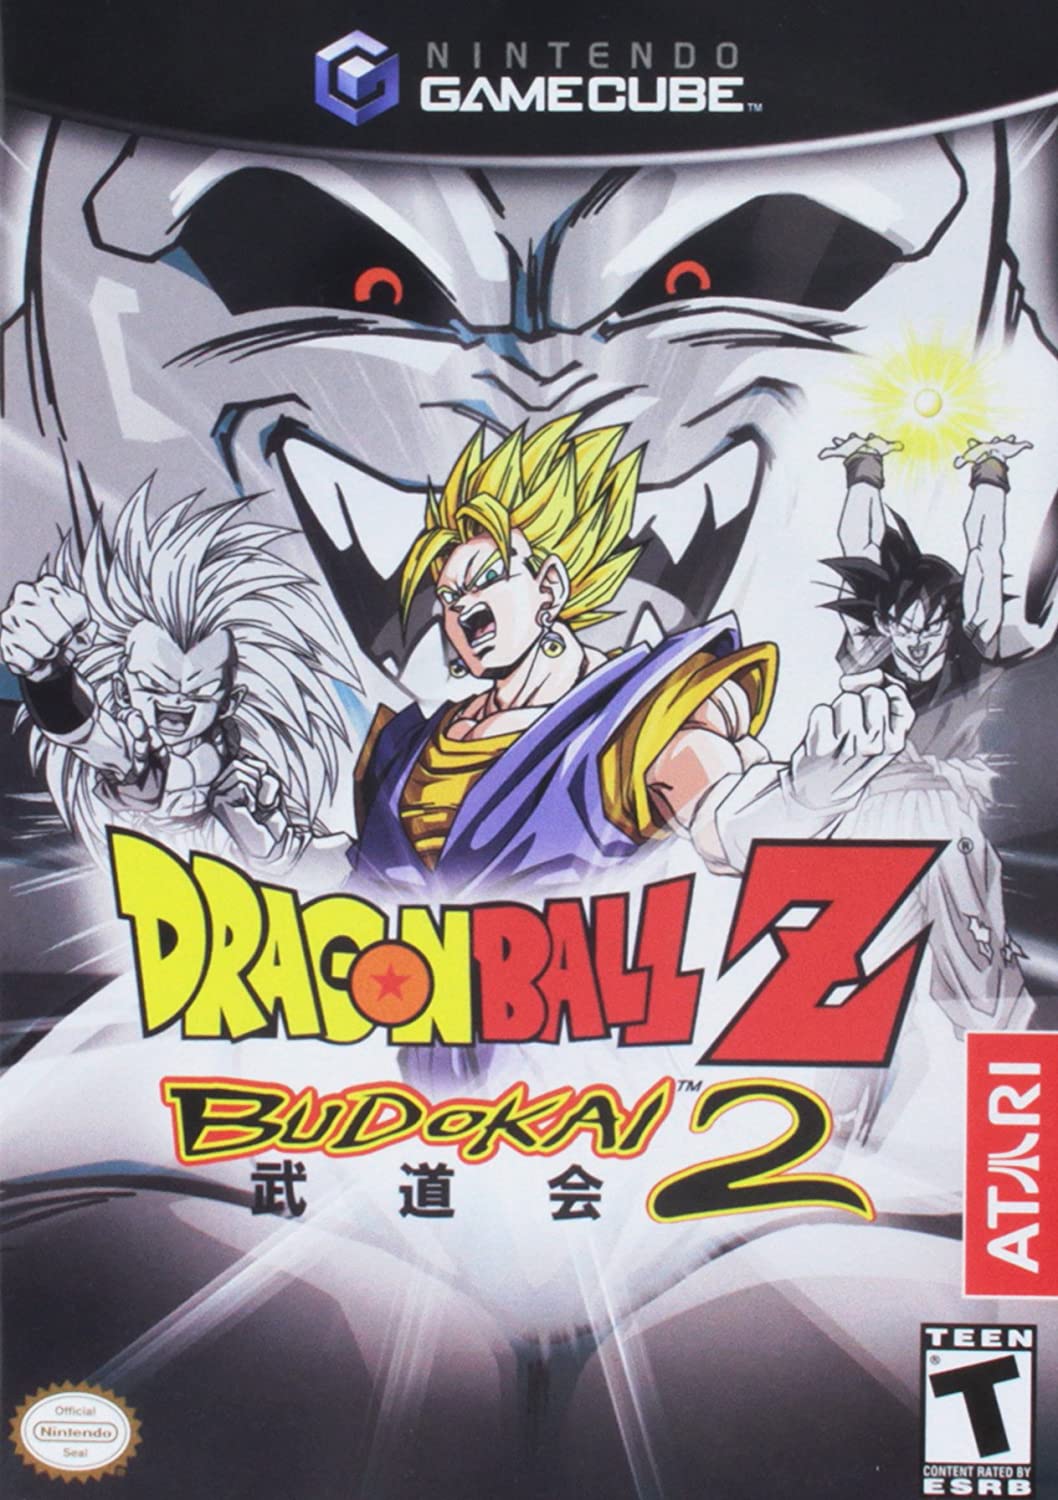 Dragon Ball Z: Budokai 2 player count stats